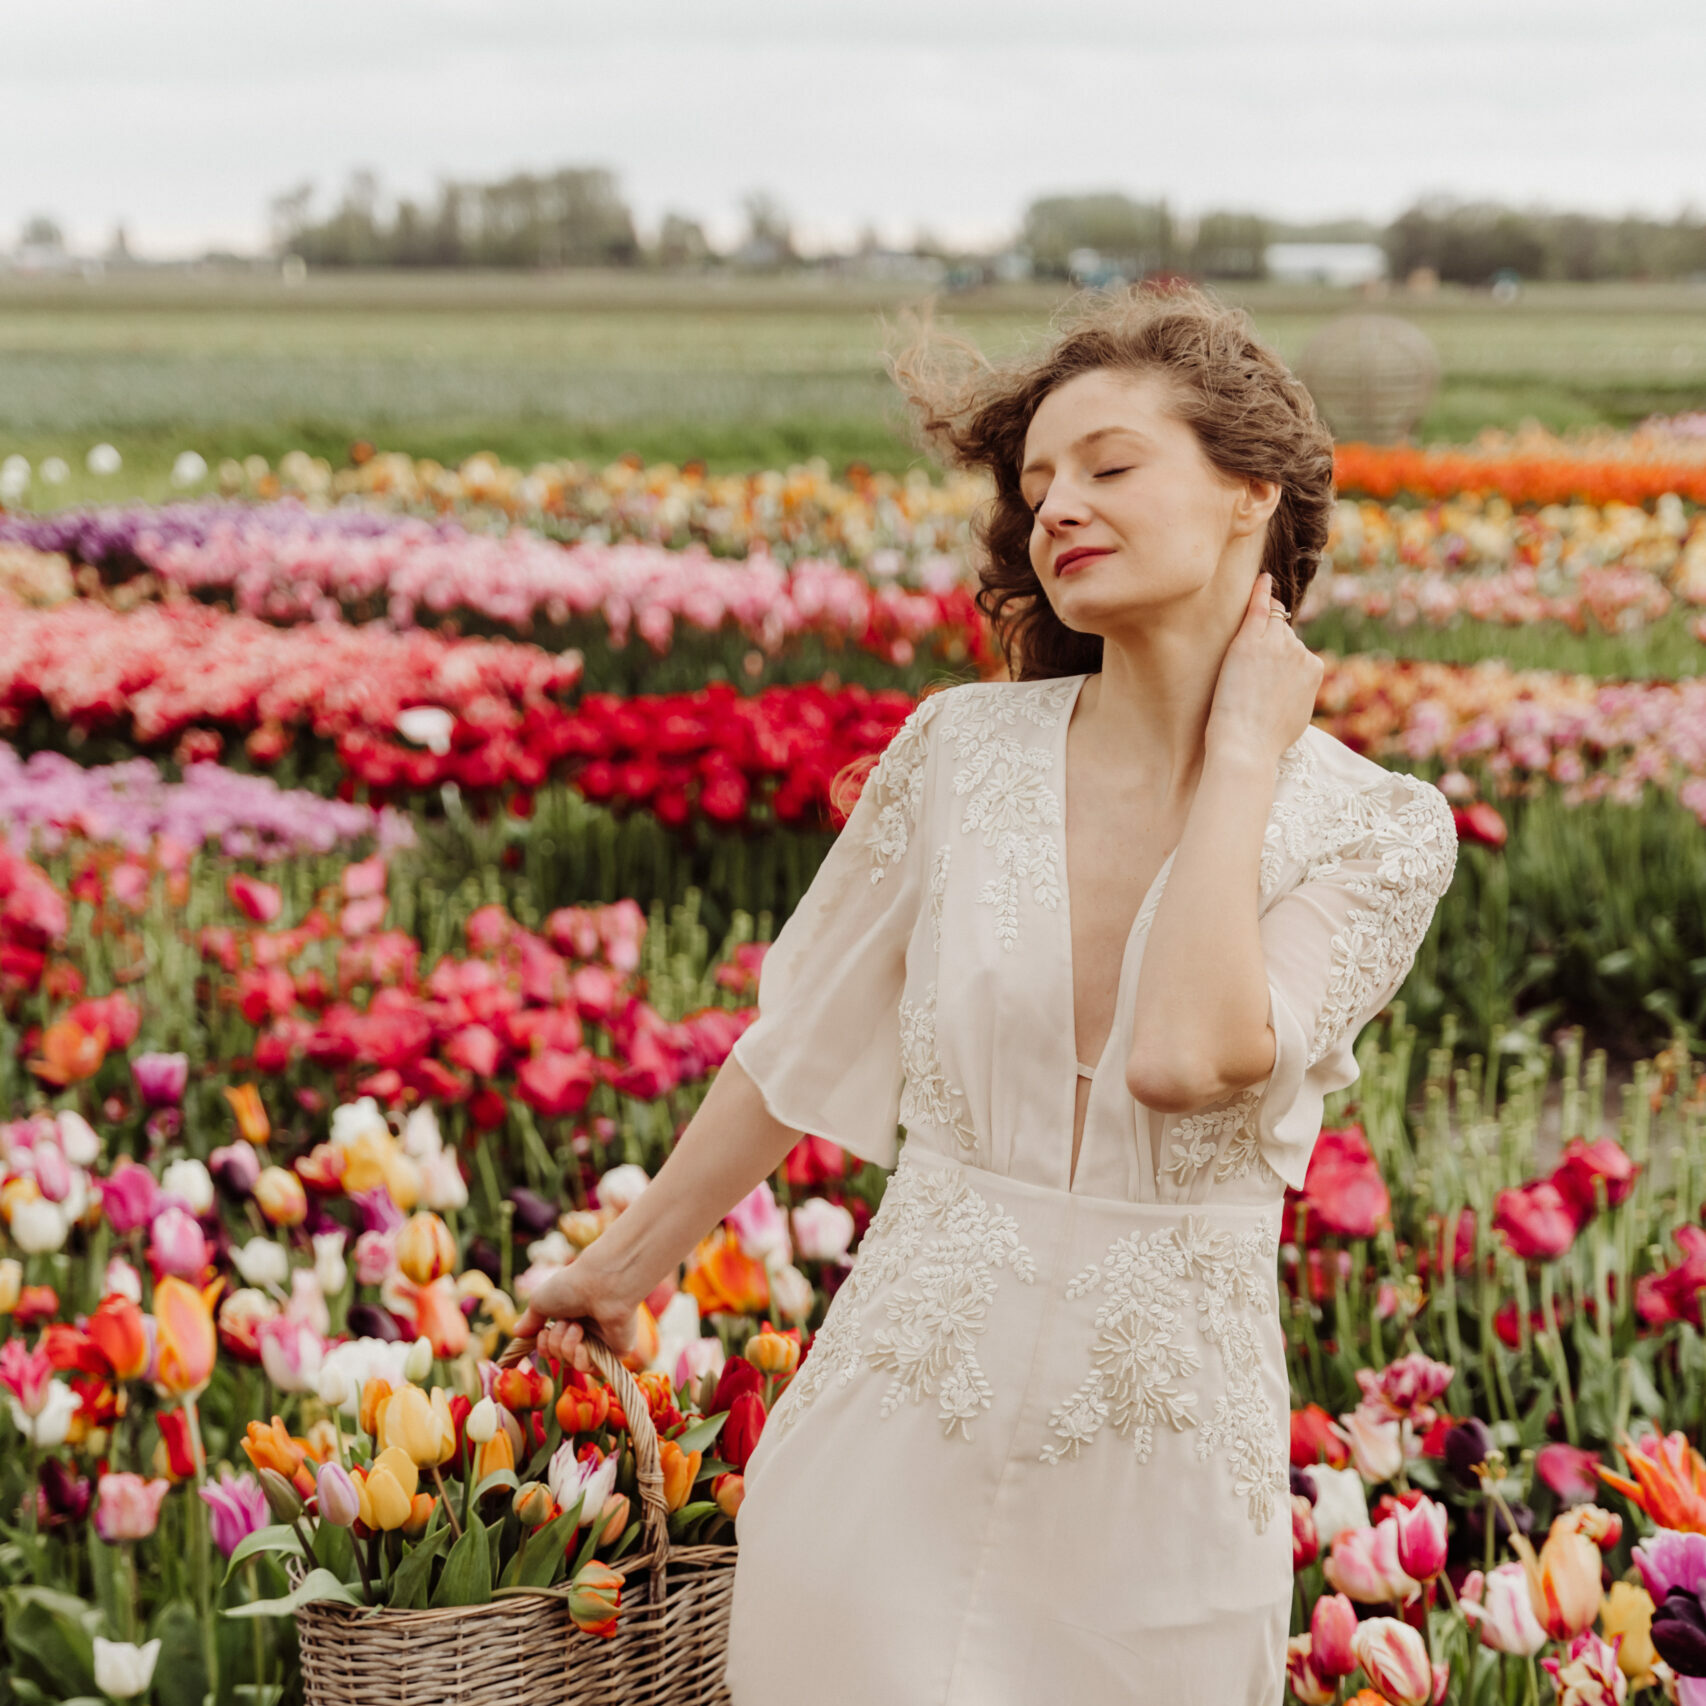 Tulip fields photoshoot Lisse